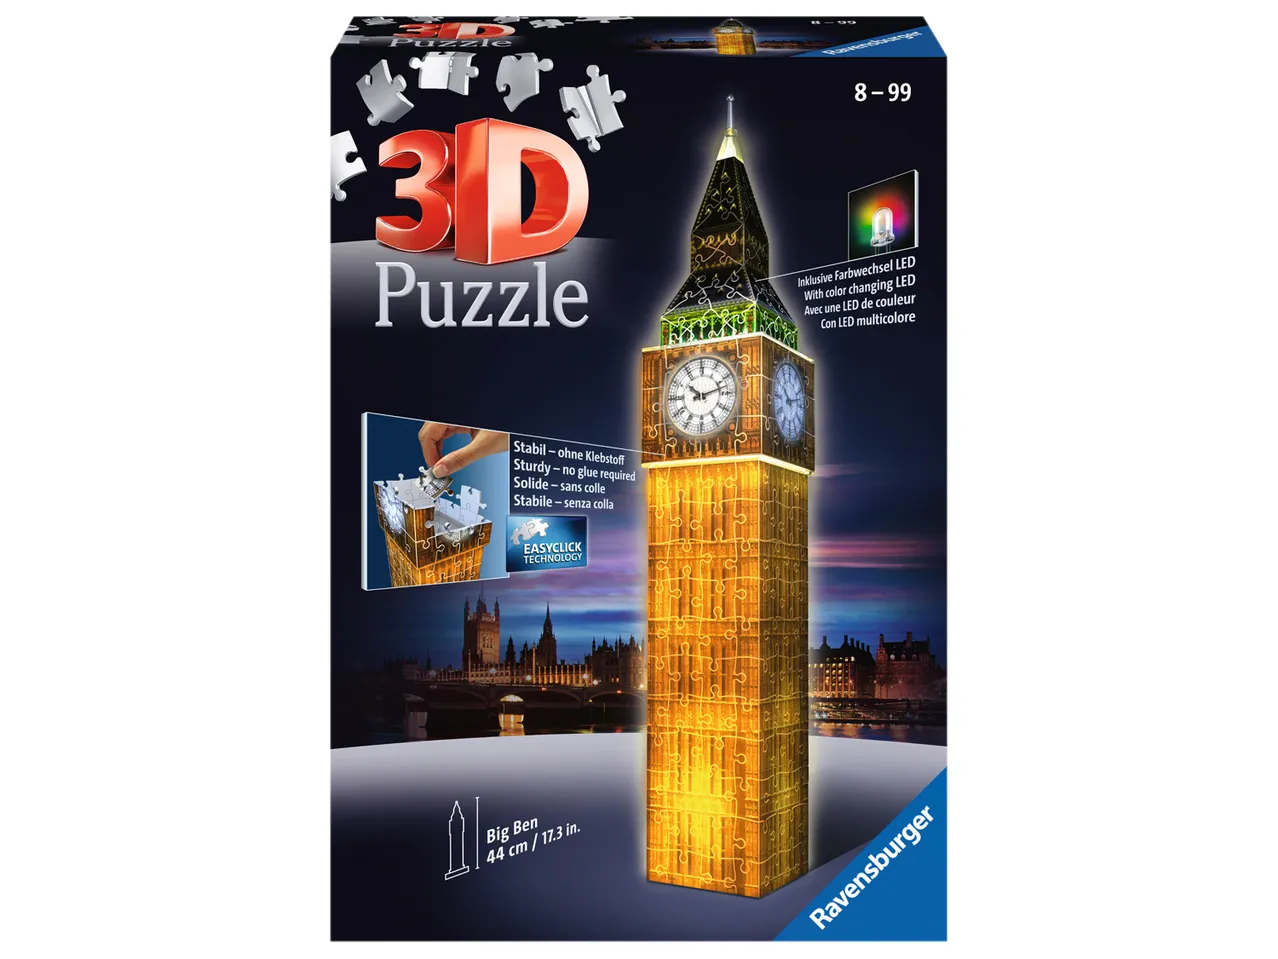 Puzzle 3D con LED , prezzo 19.99 EUR 
Puzzle 3D con LED 216 pezzi 
A scelta fra
- ...